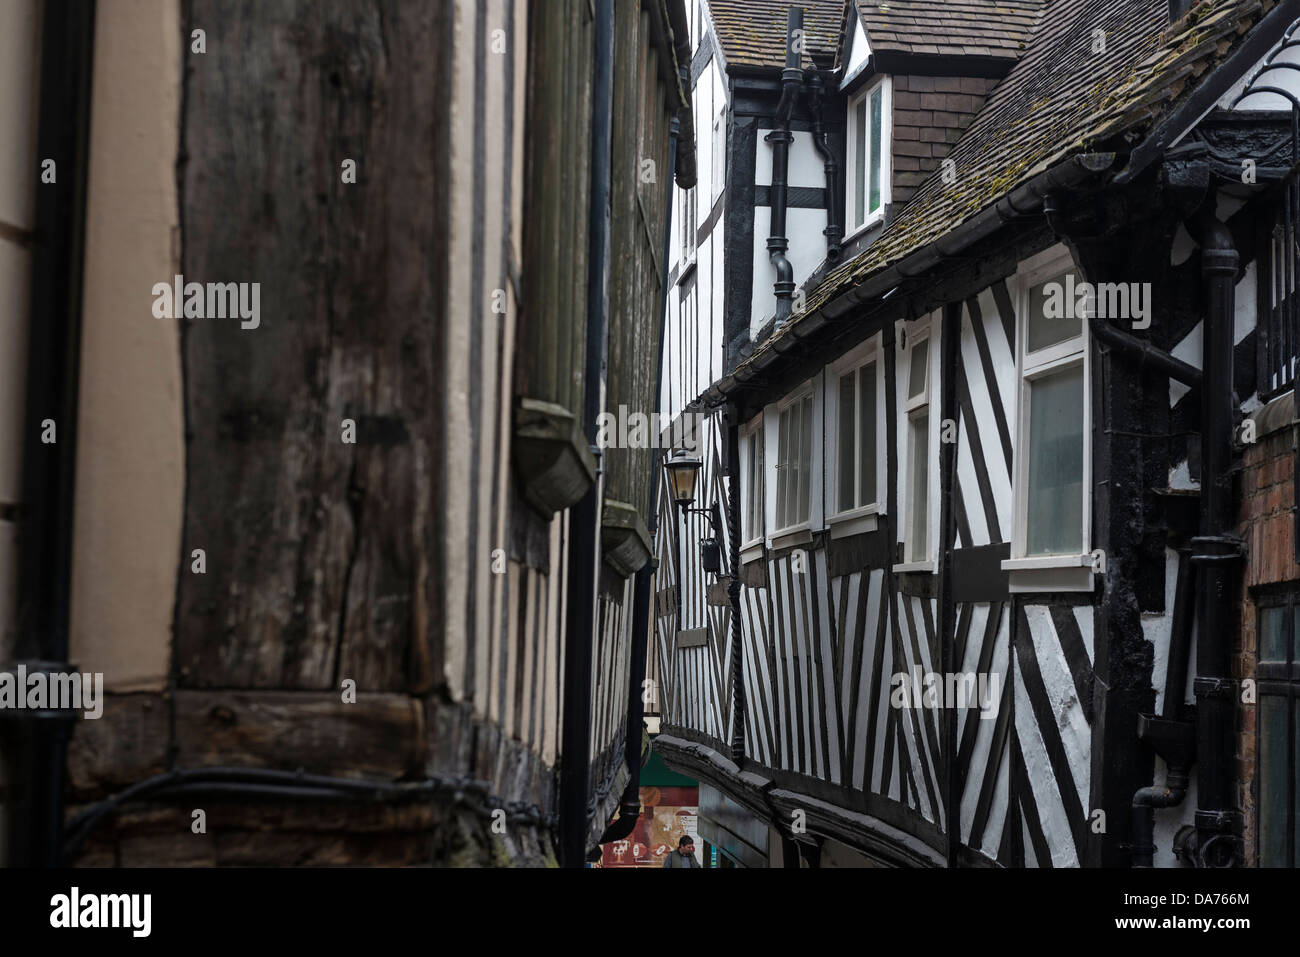 Black and White timber framed Medieval buildings along Grope Lane, Shrewsbury Stock Photo